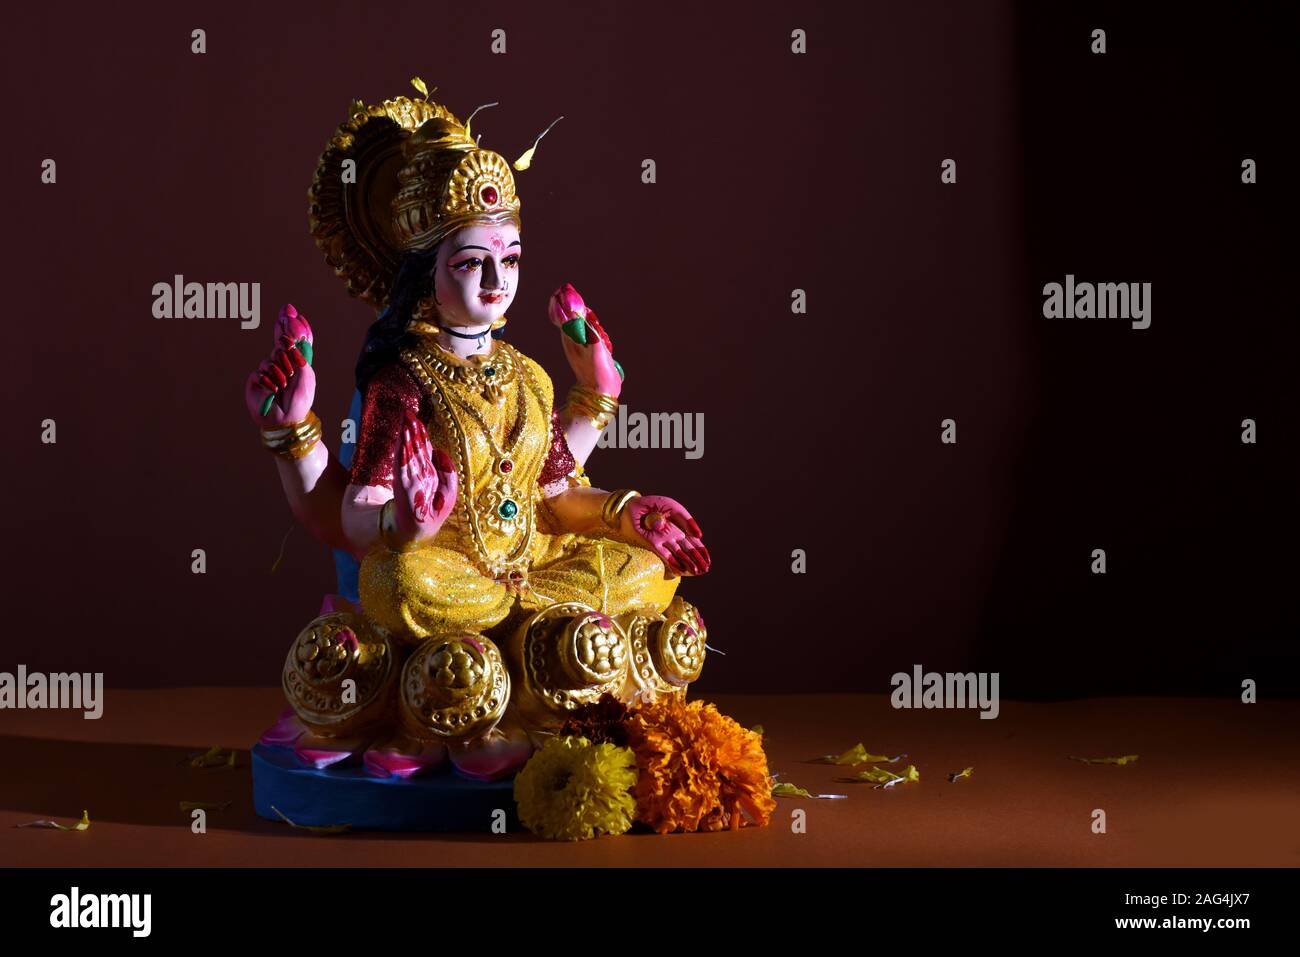 7. Lakshmi, Hindu Goddess of Wealth and Beauty - wide 2